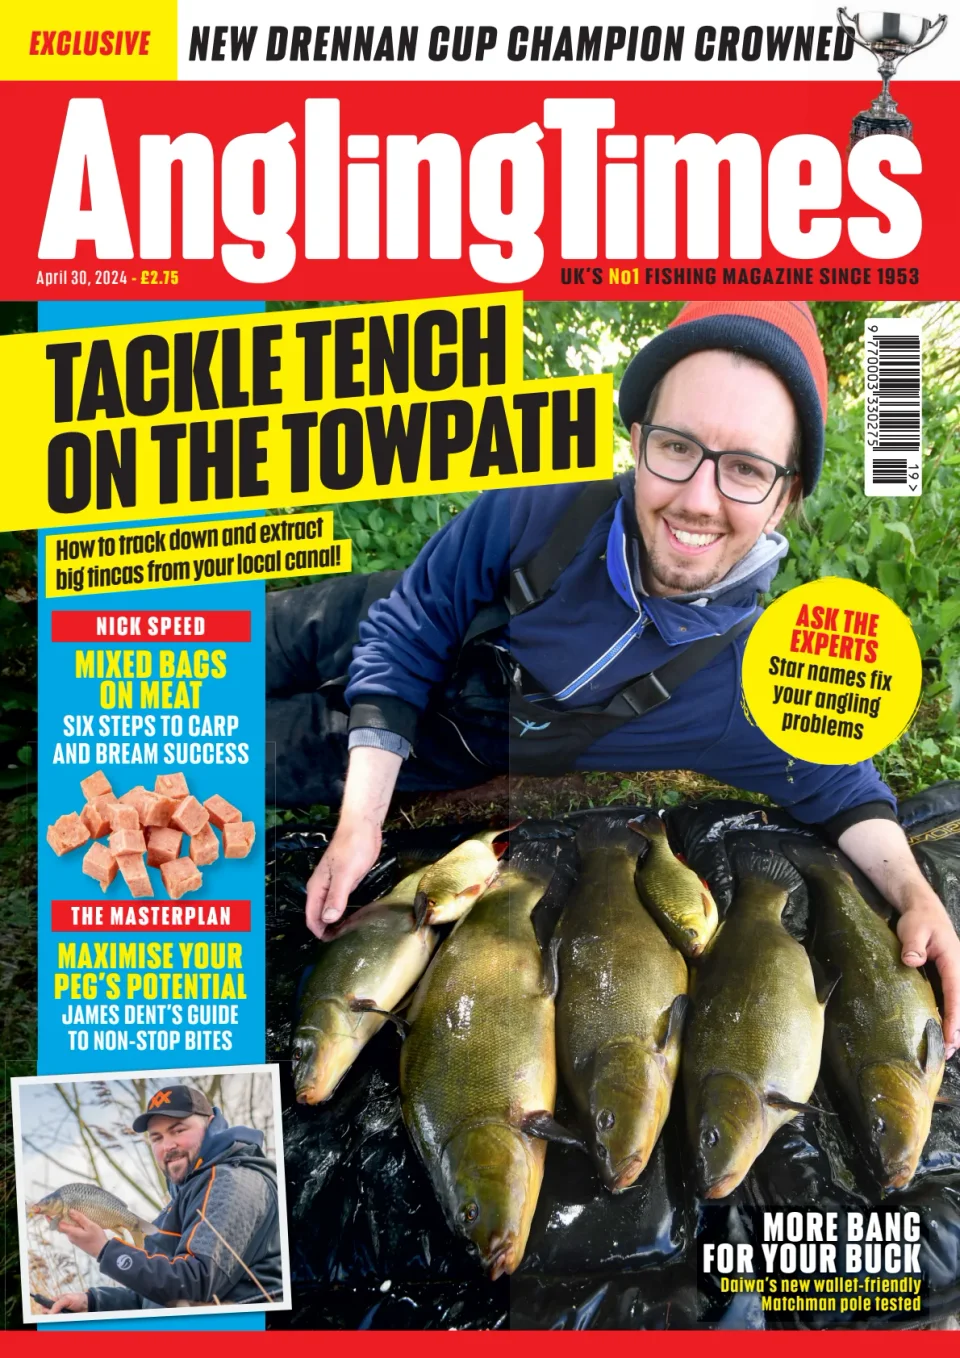 Angling Times (UK)